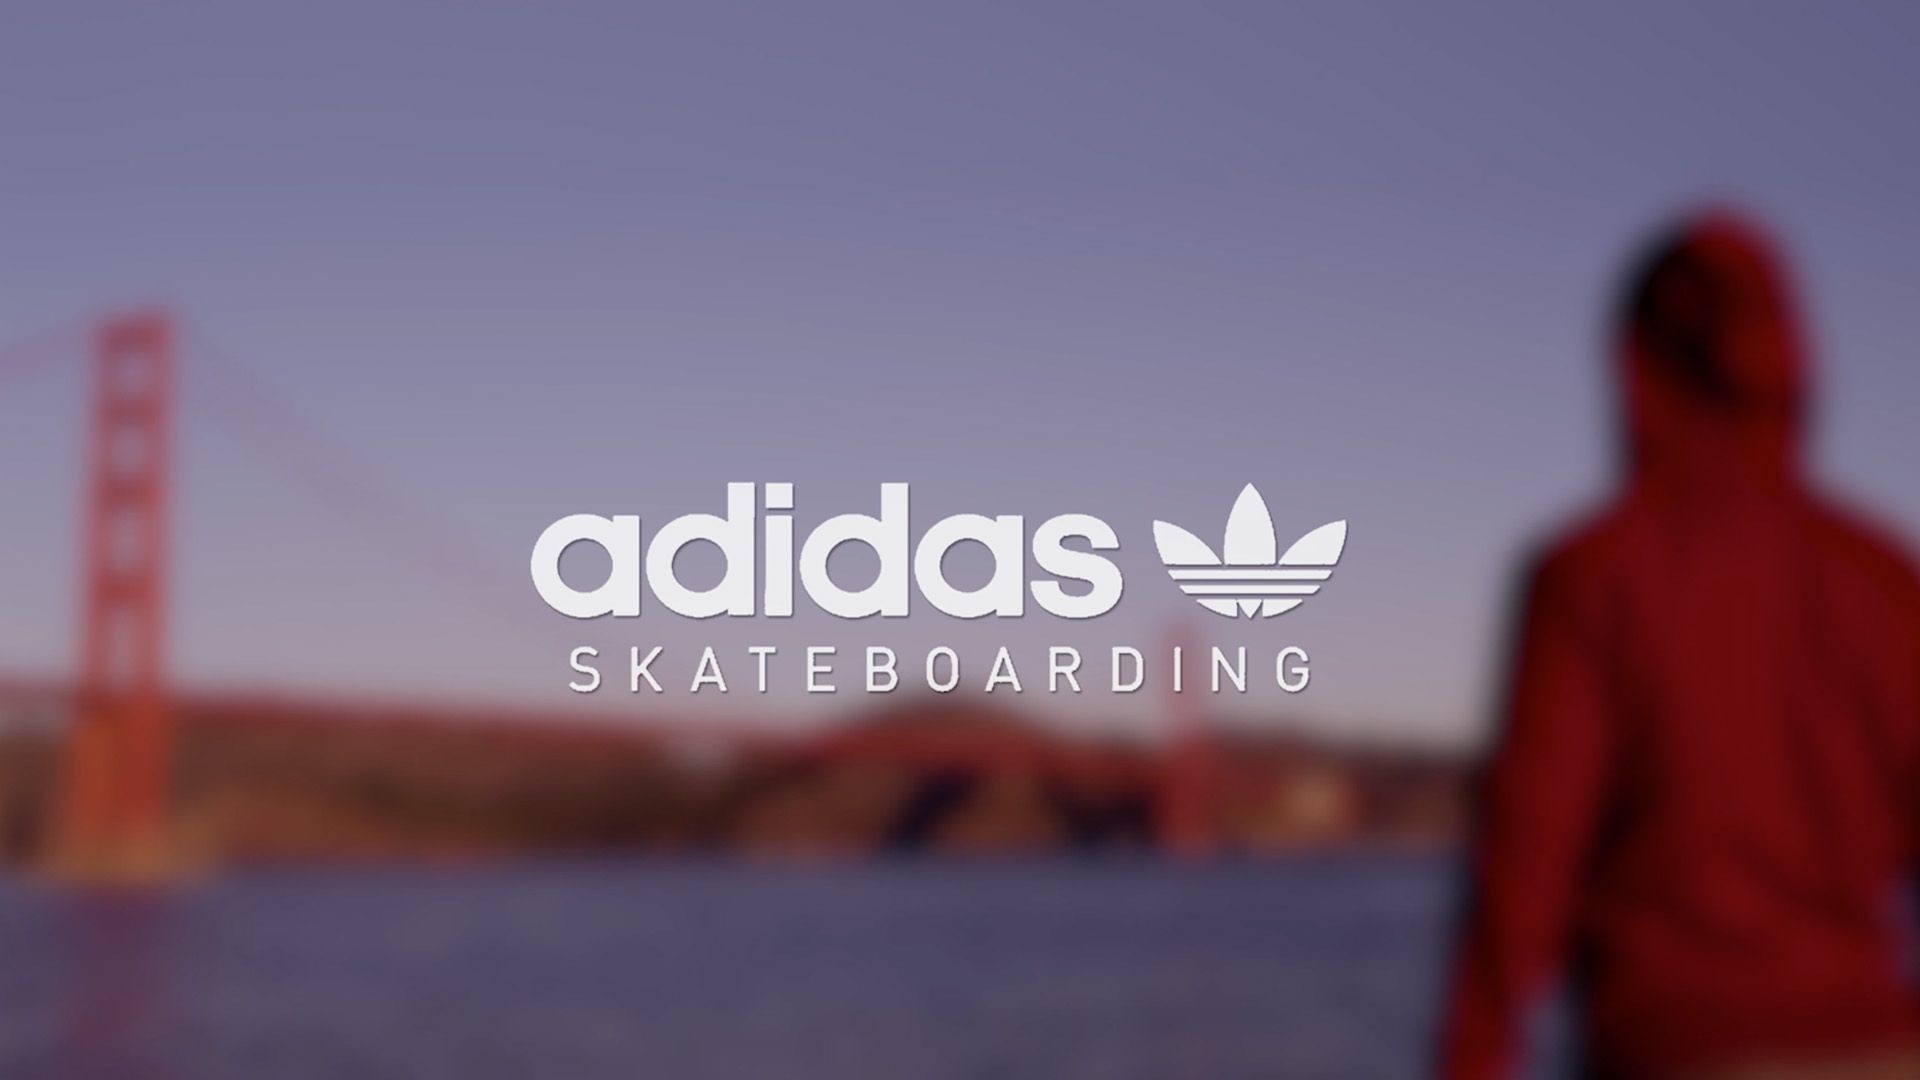 Adidas Skateboarding Wallpaper 50 Images